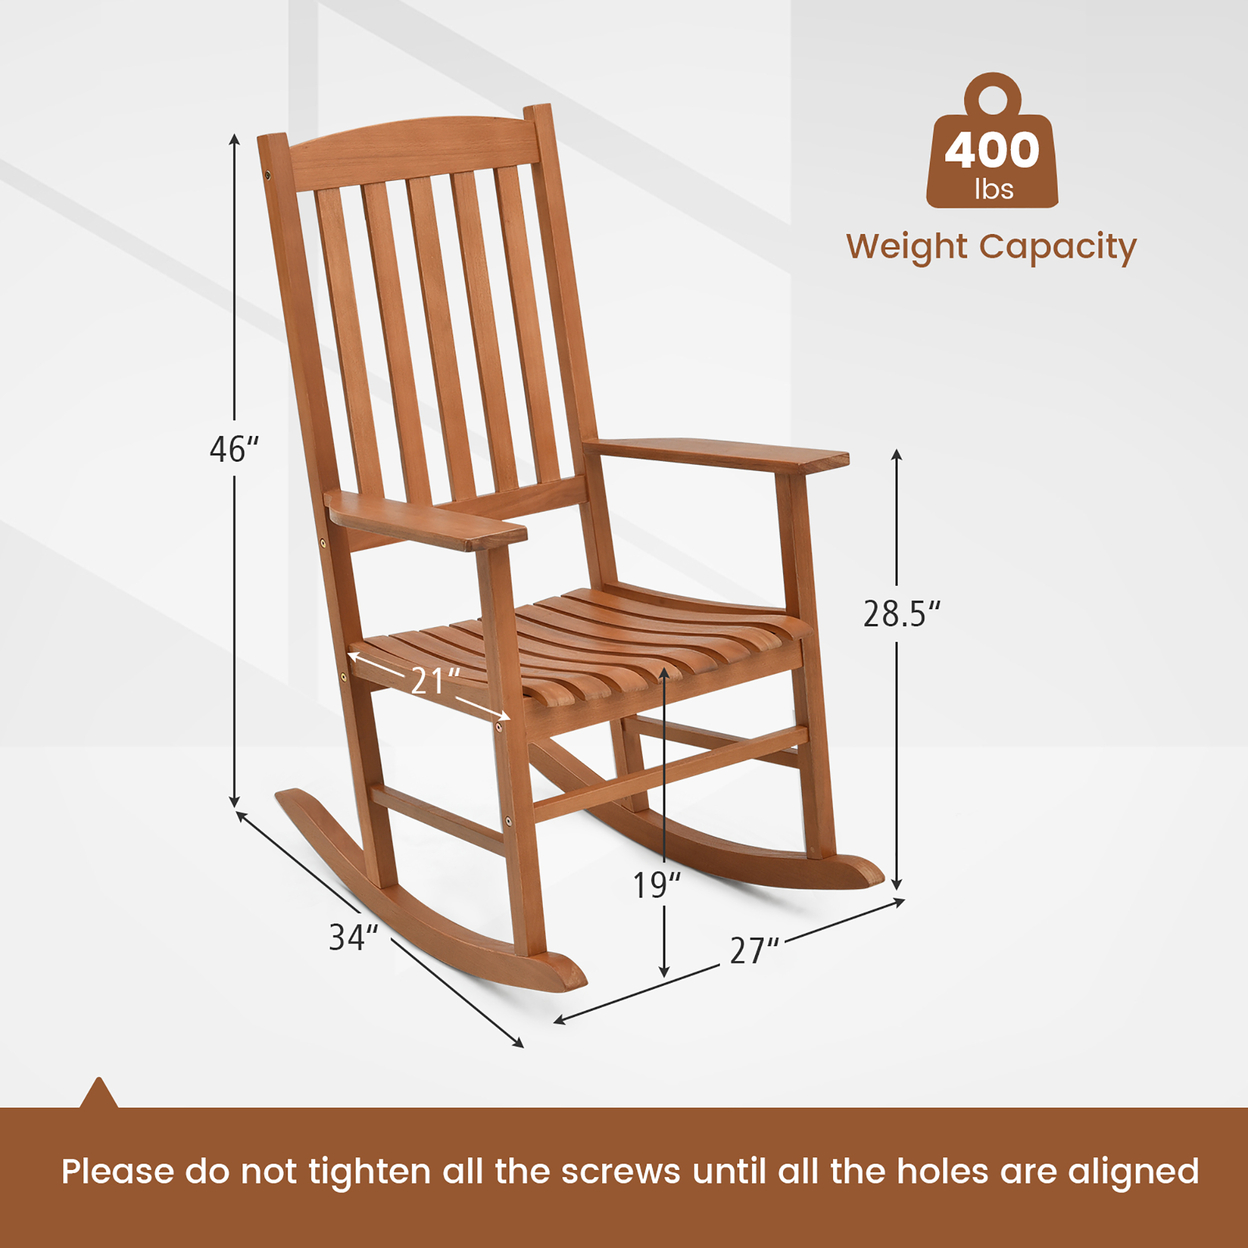 2 Pieces Patio Rocking Chair W/ 400 Lbs Weight Capacity Eucalyptus Wood Porch Rocker